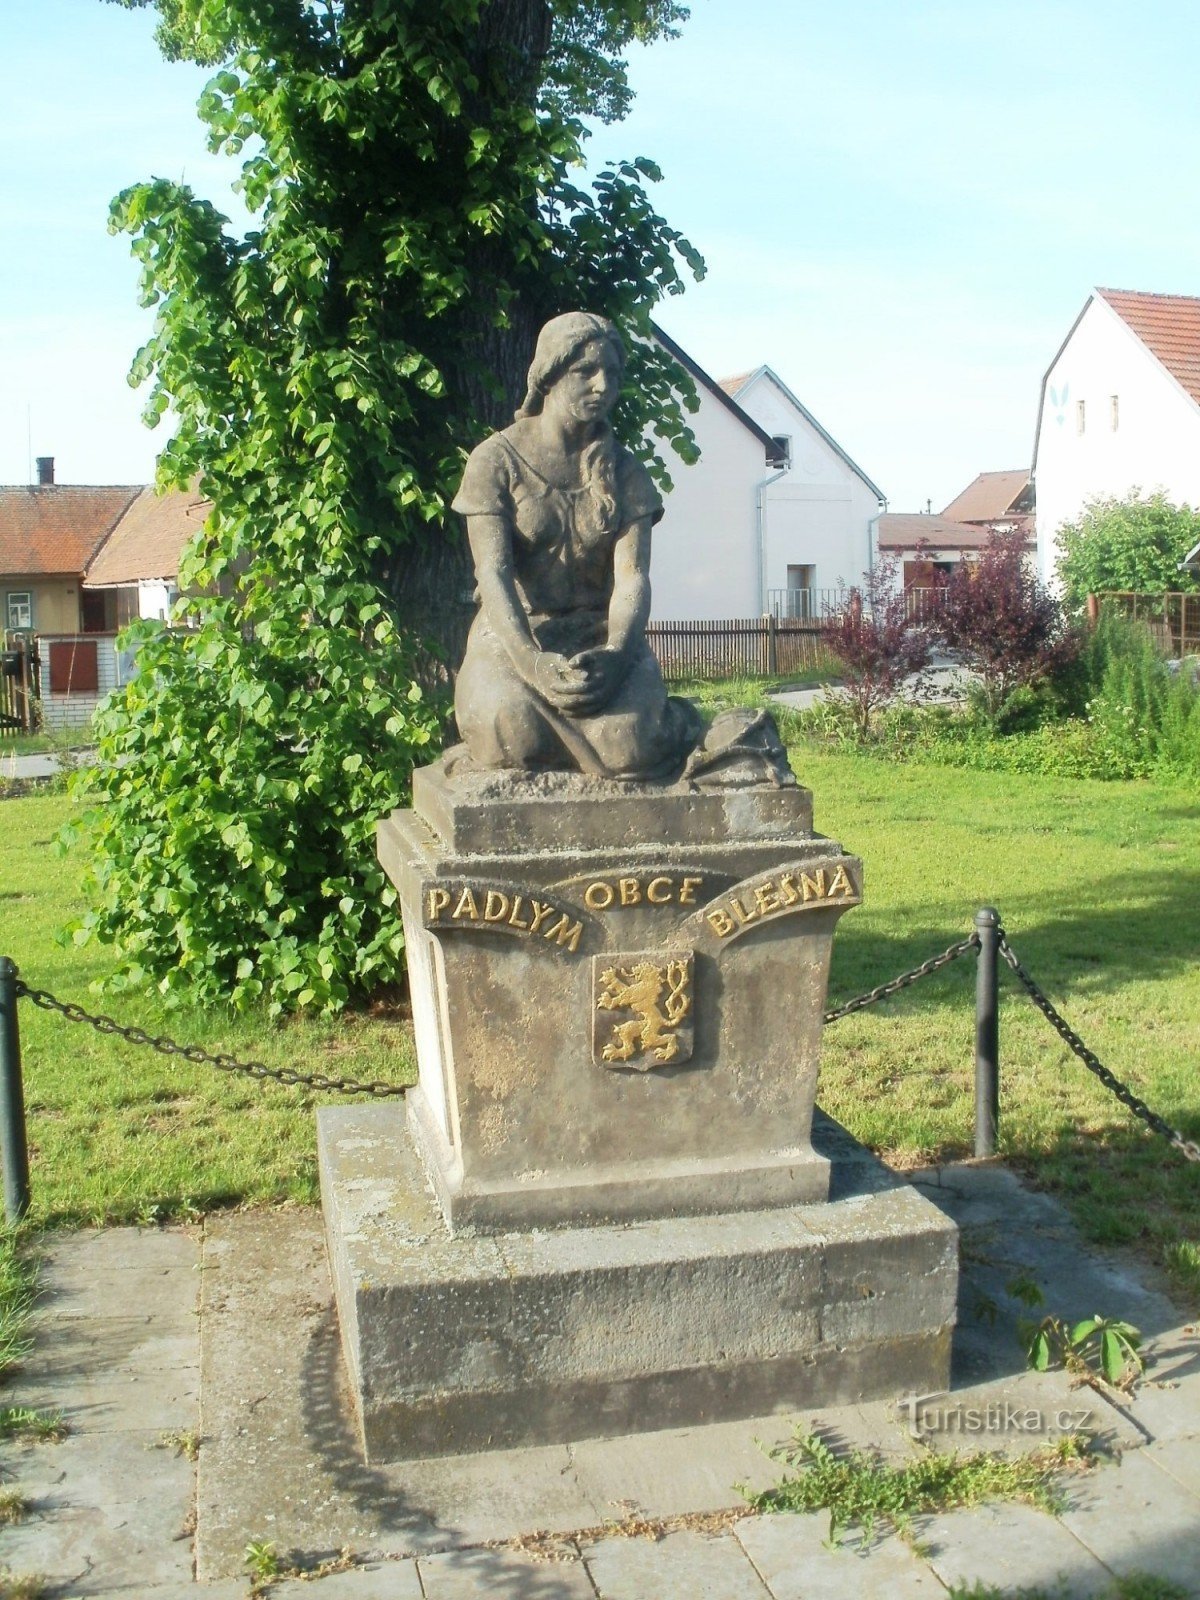 Blešno - muistomerkki sotien uhreille